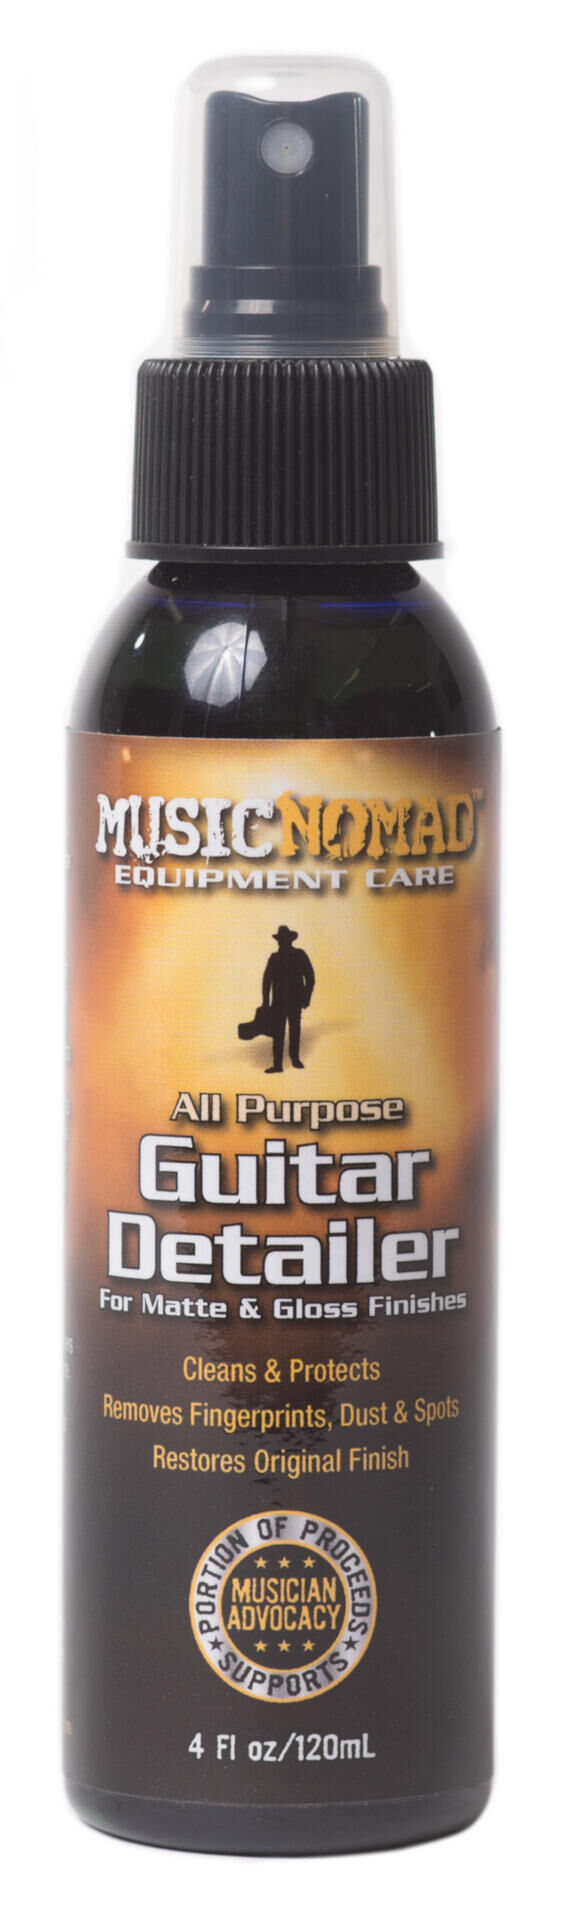 Music Nomad Mn101 - Guitar Polish Maintenance 